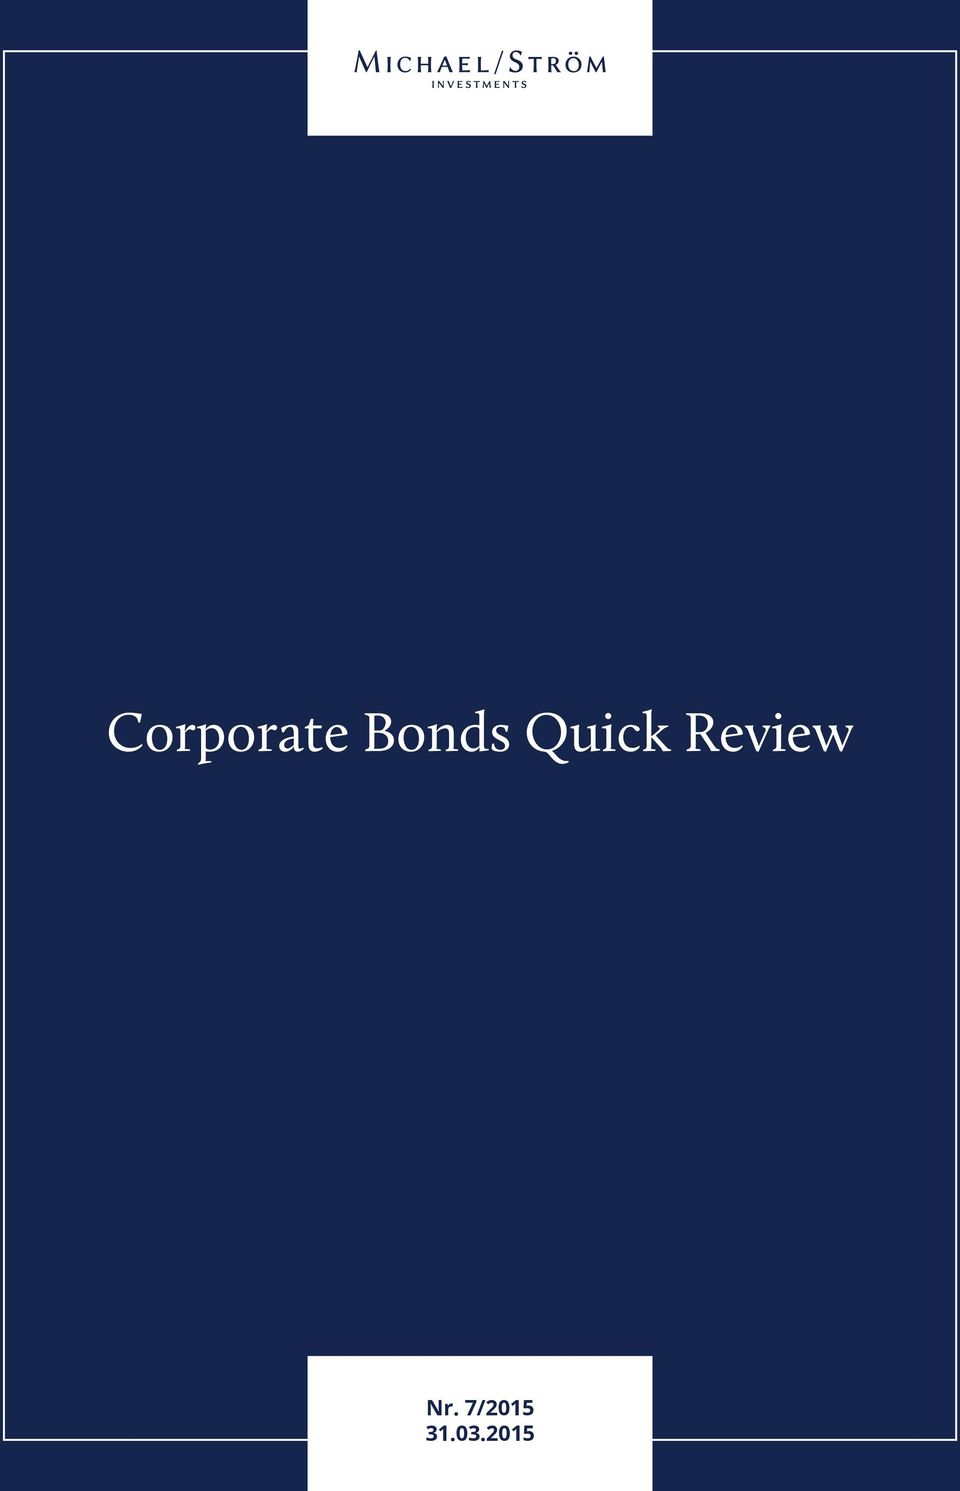 2015 Corporate Bonds